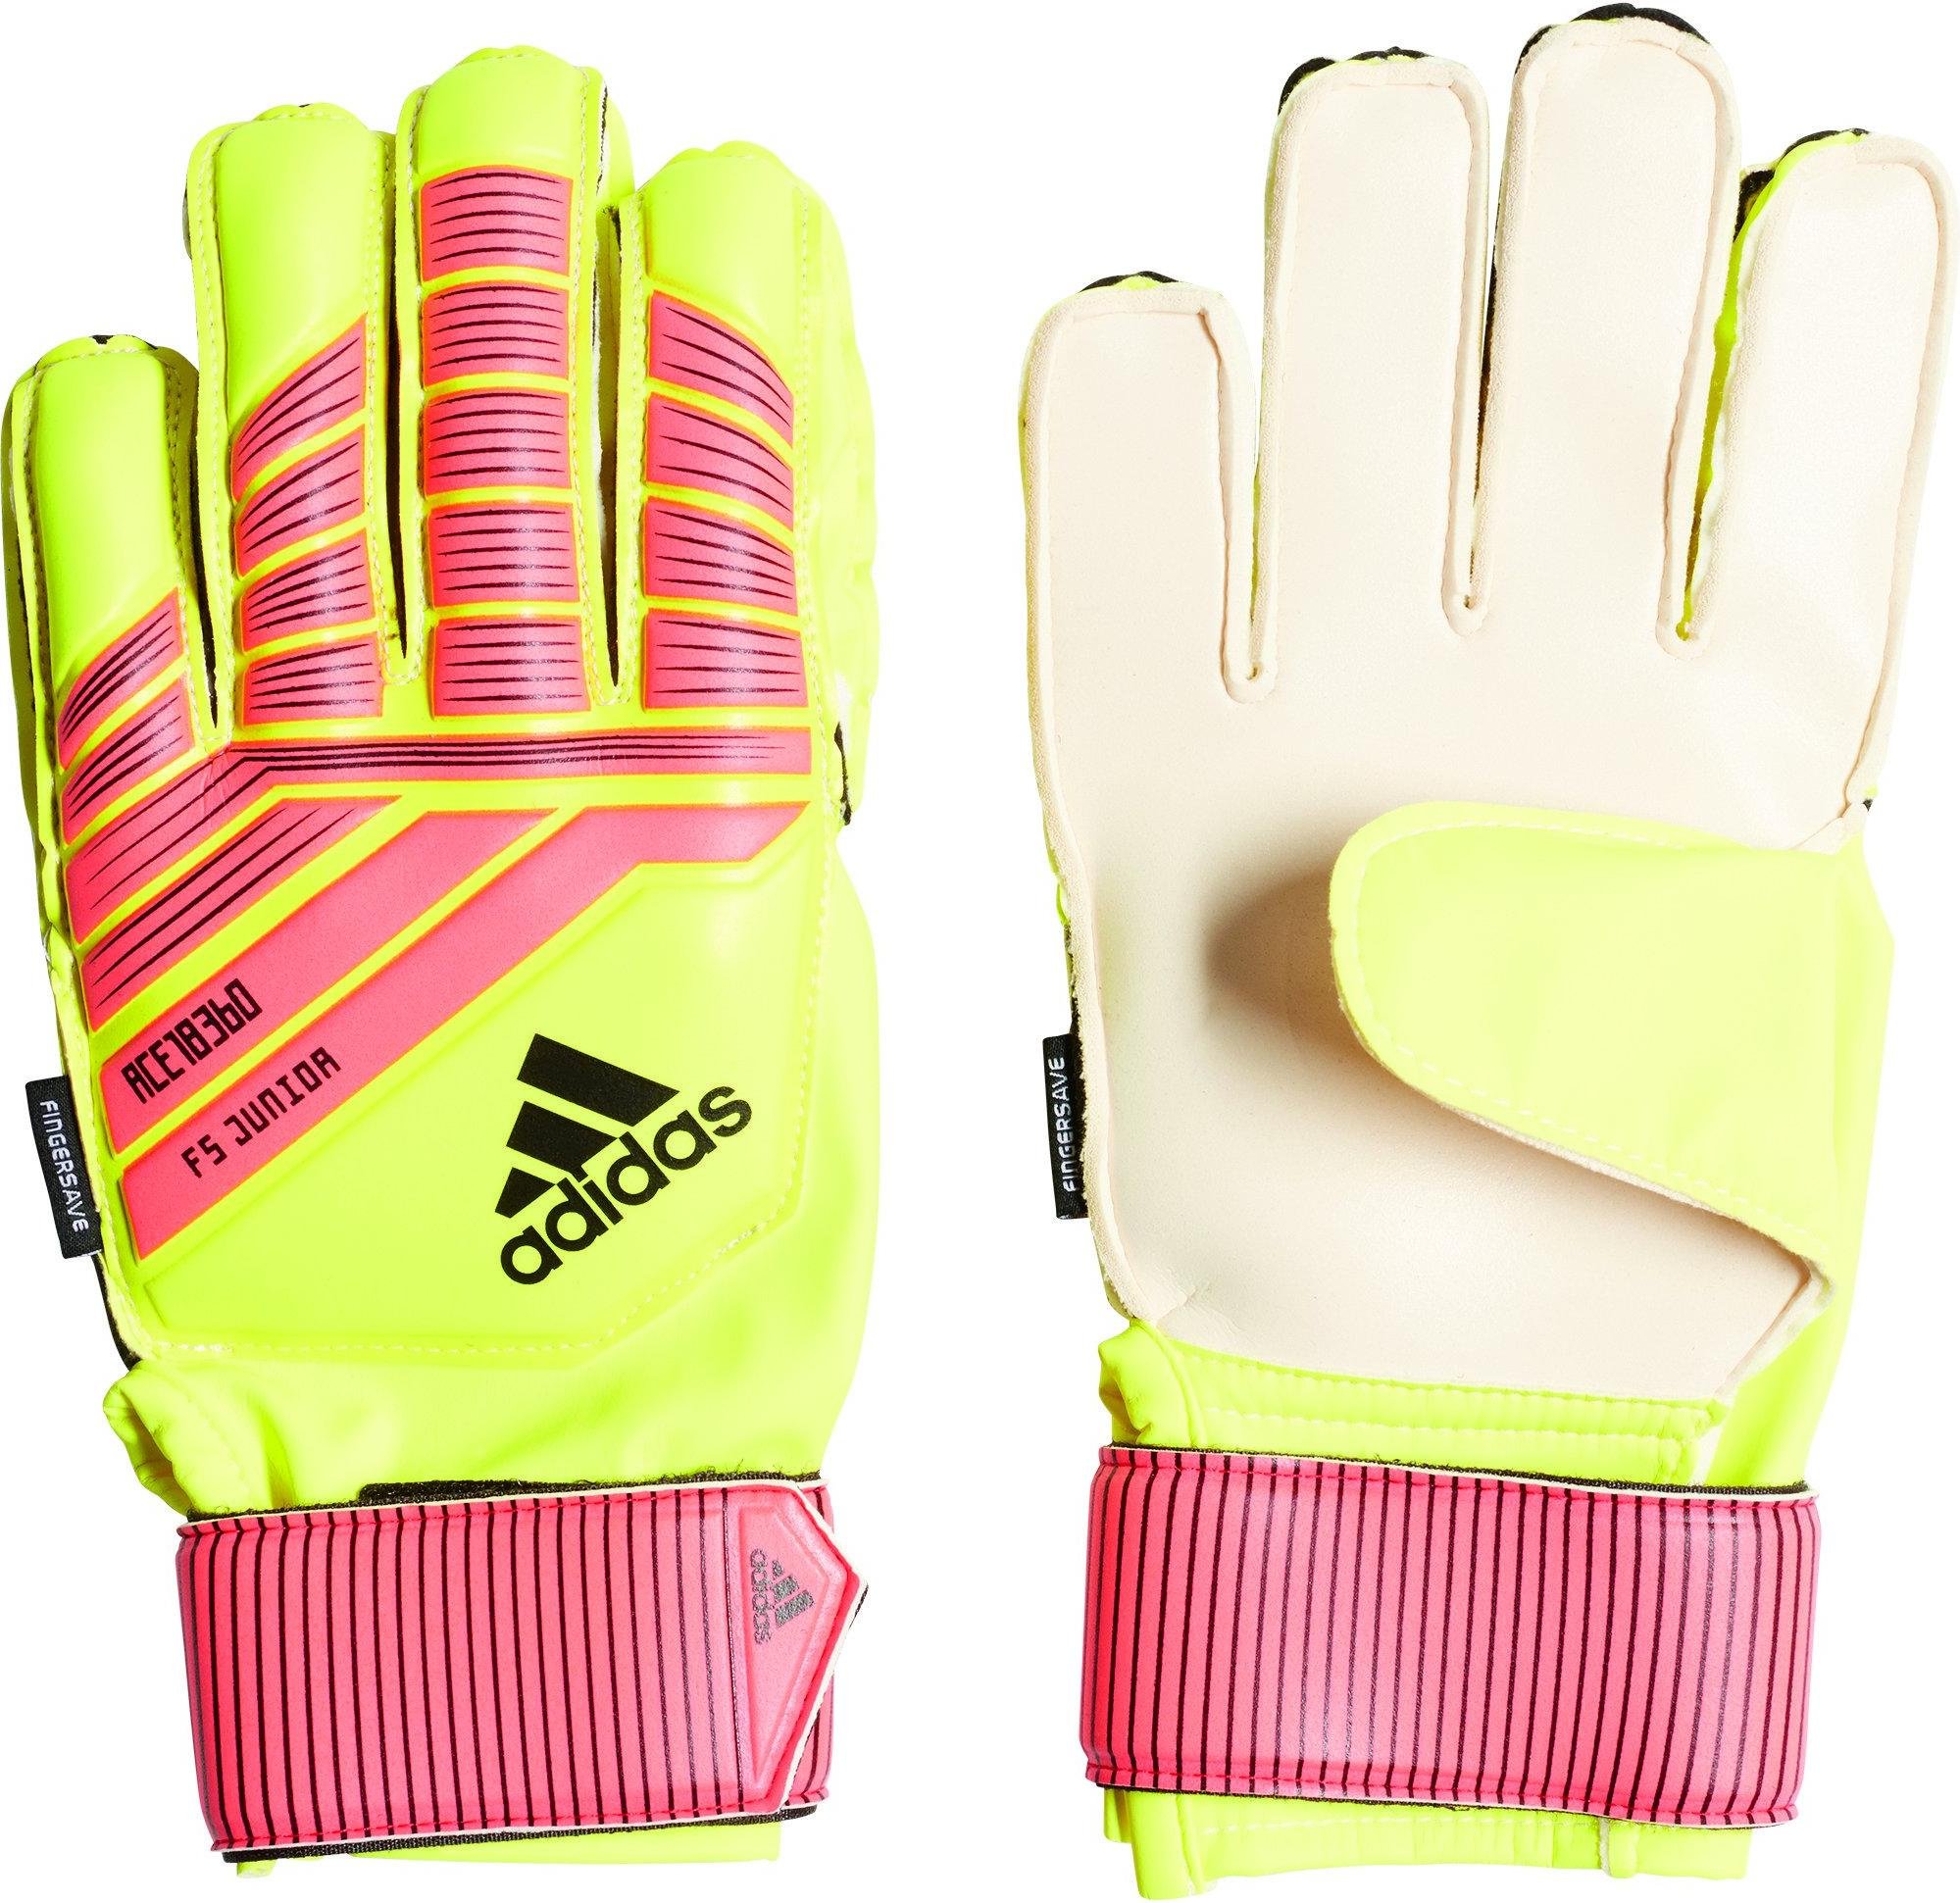 Goalkeeper's gloves adidas predator fs jr tw- kids